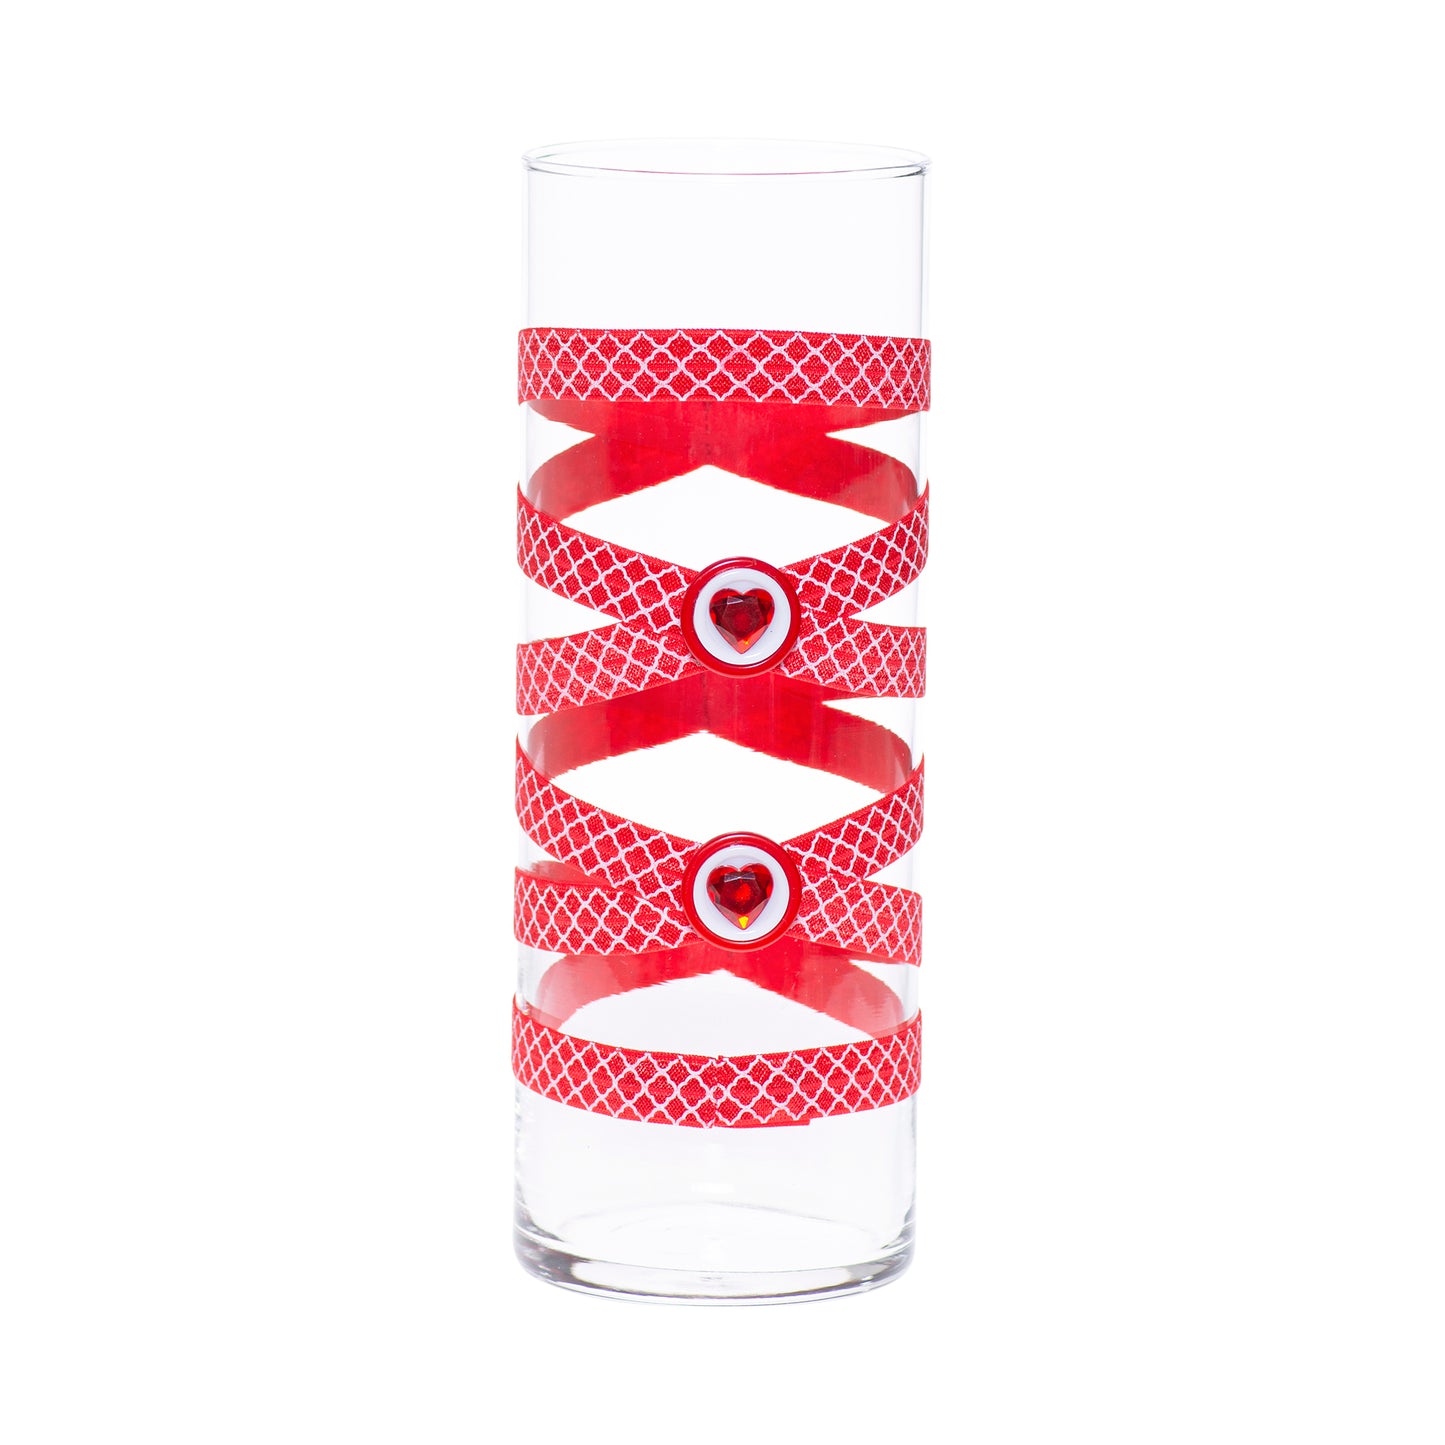 3.5" x 9.5" Vase Red White Quatrefoil 5X 5 Red Gem Hearts Valentine Love Complete Collection